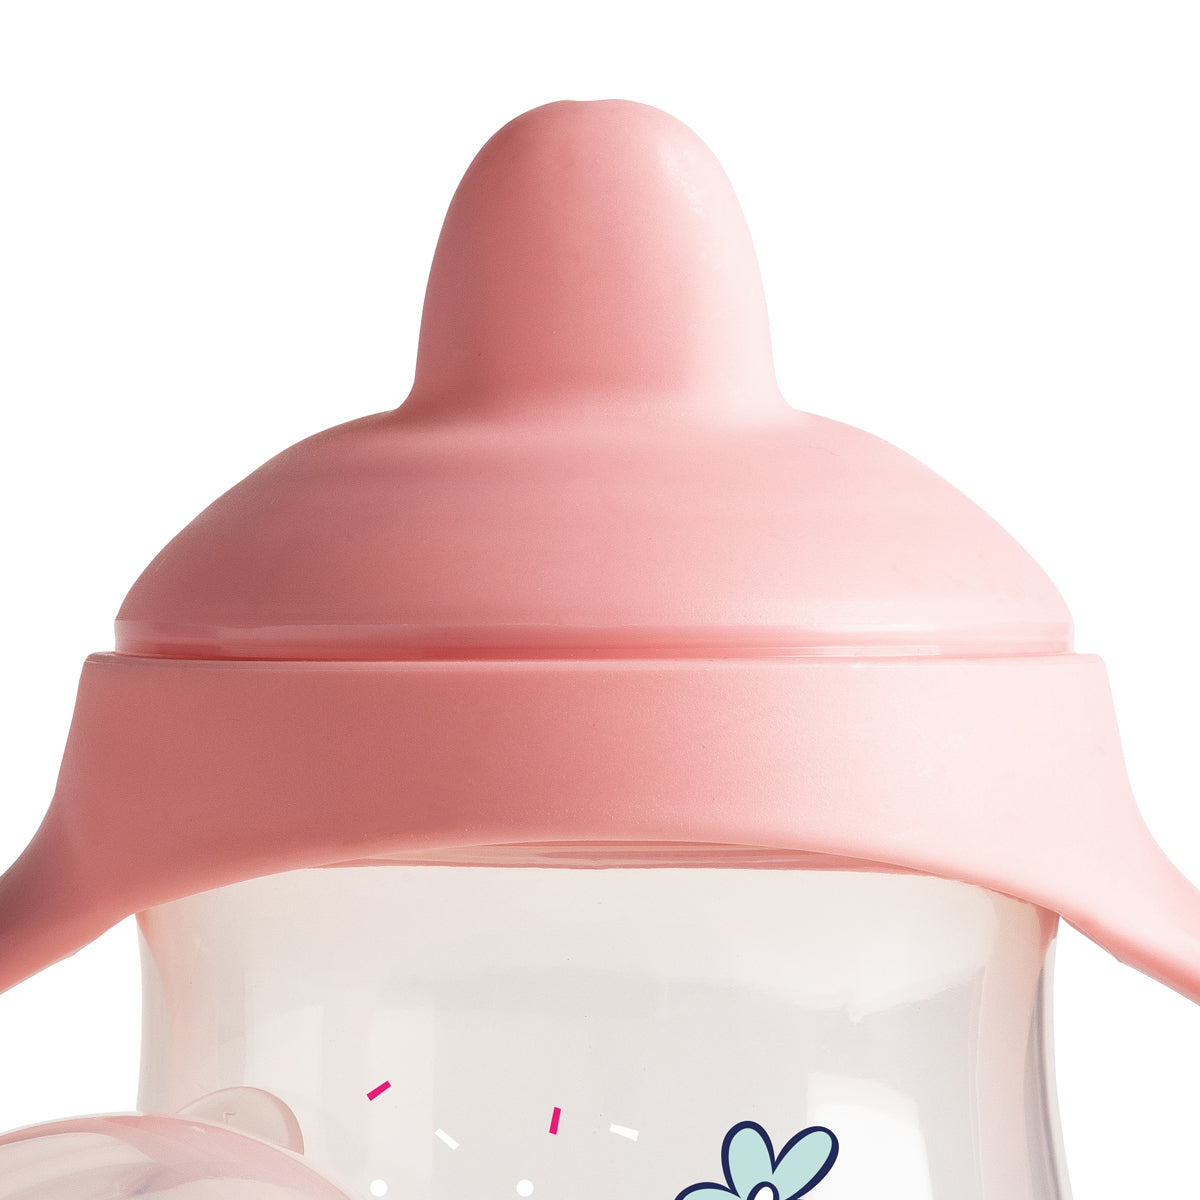 Tasse à bec avec anses Minnie Confettis - 250 mL Disney Baby - BB Malin